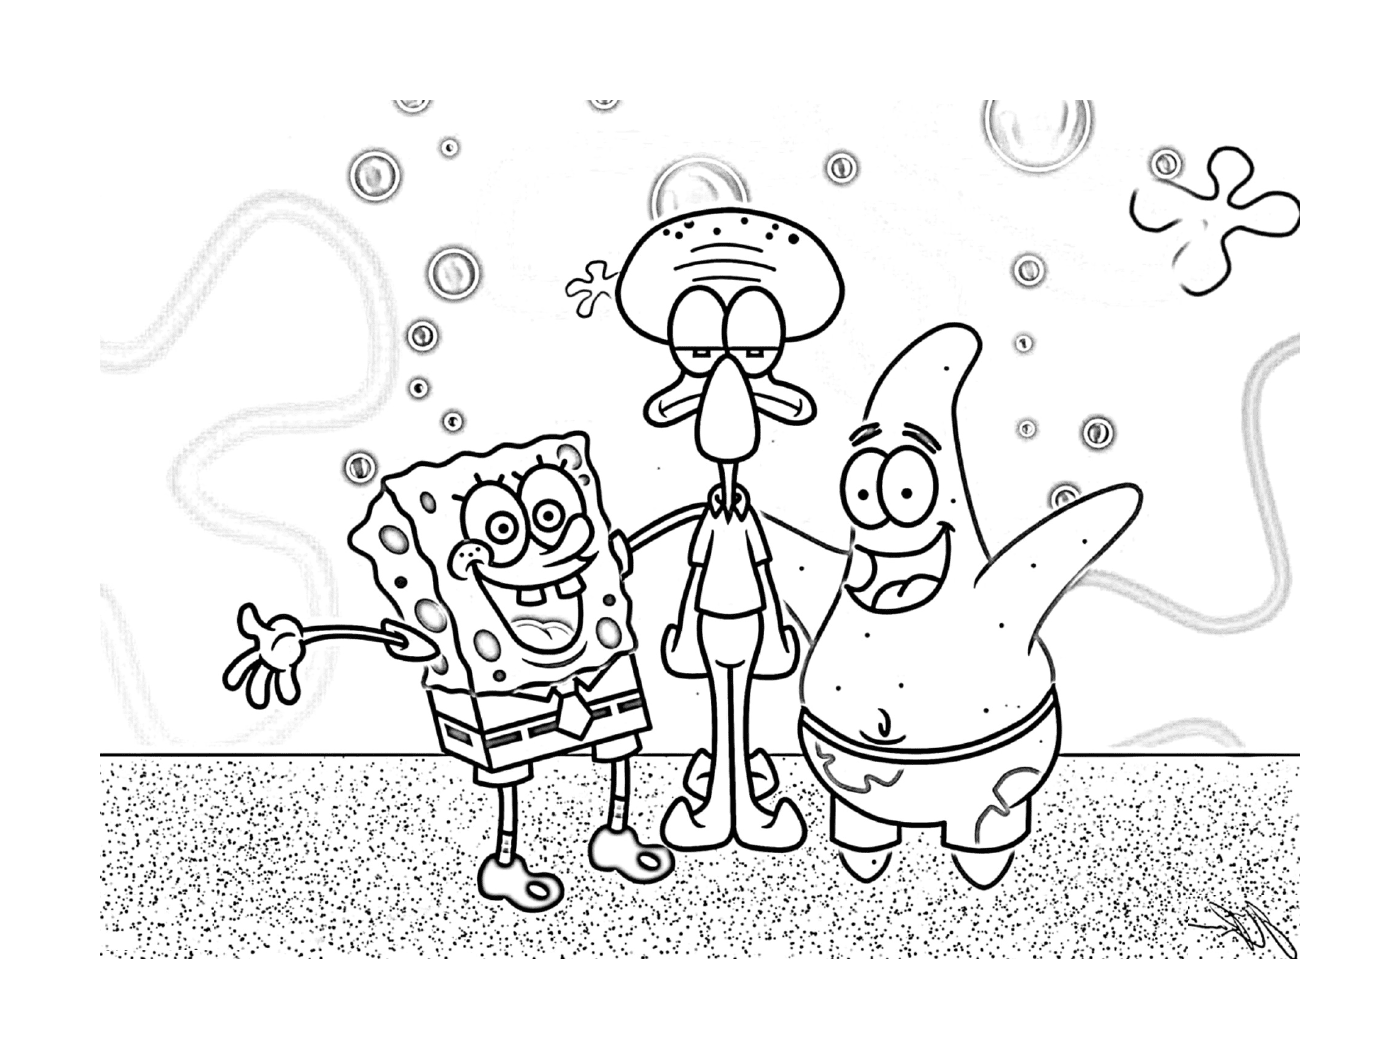  Spongebbob和Patrick, 一个幸福的家庭 